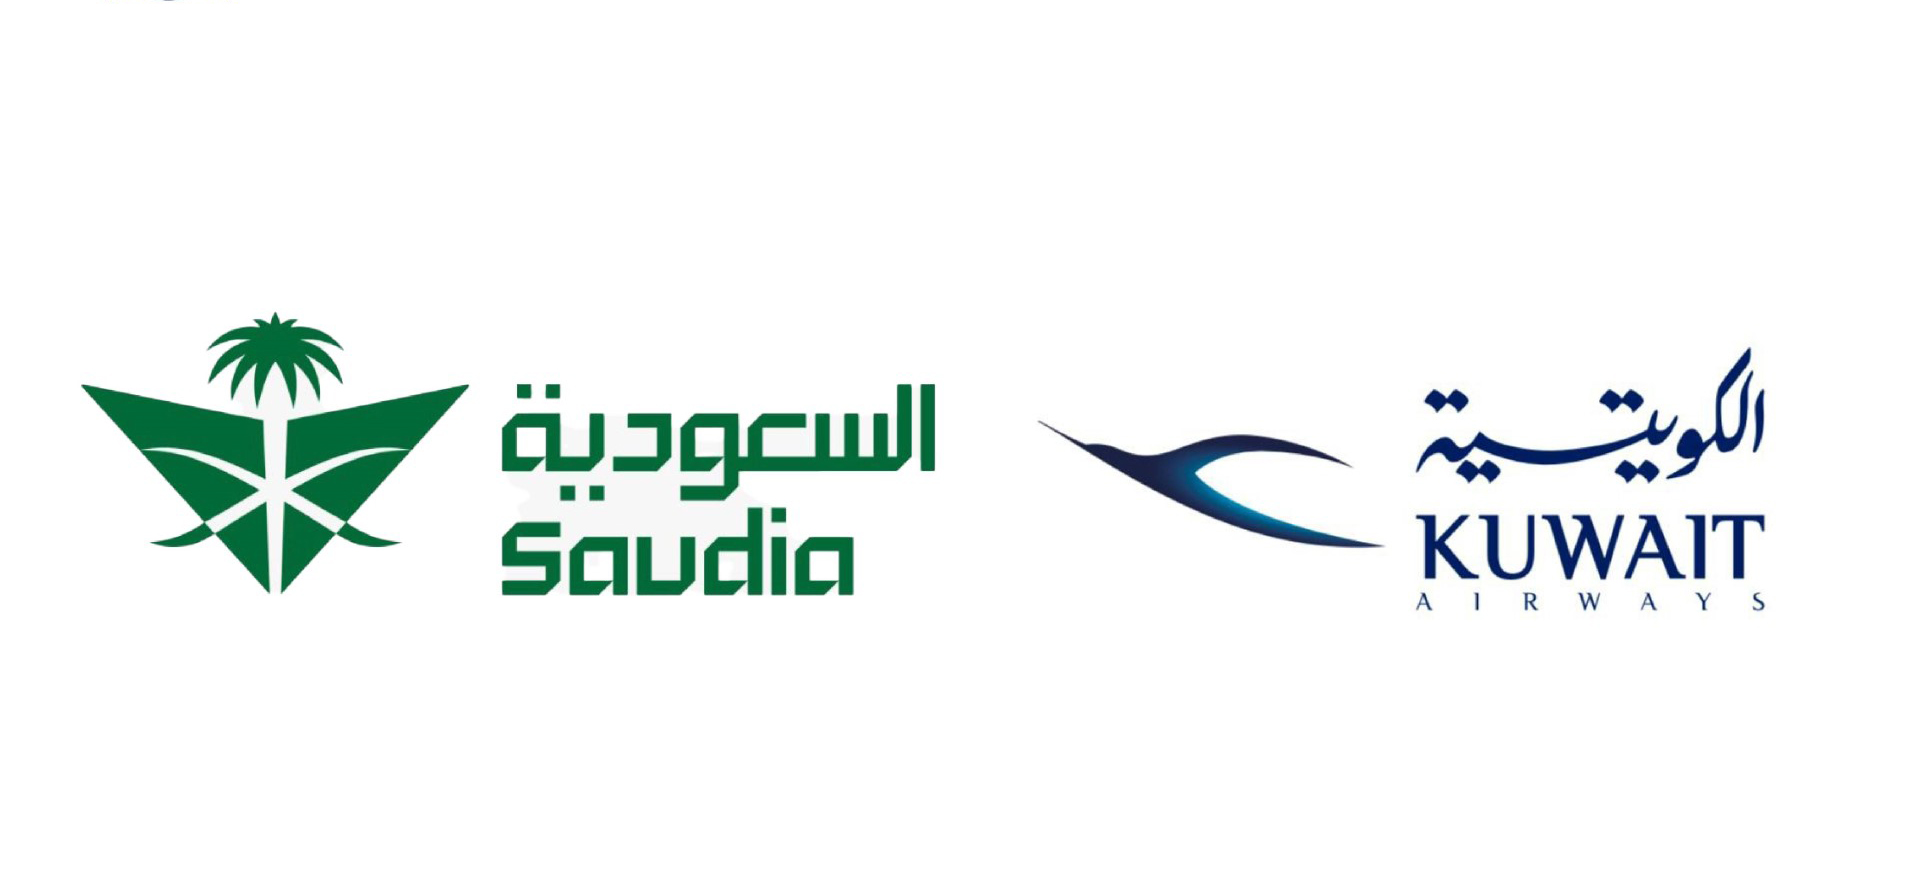 Kuwait Airways, Saudi expand codeshare partnership, provide better connectivity
